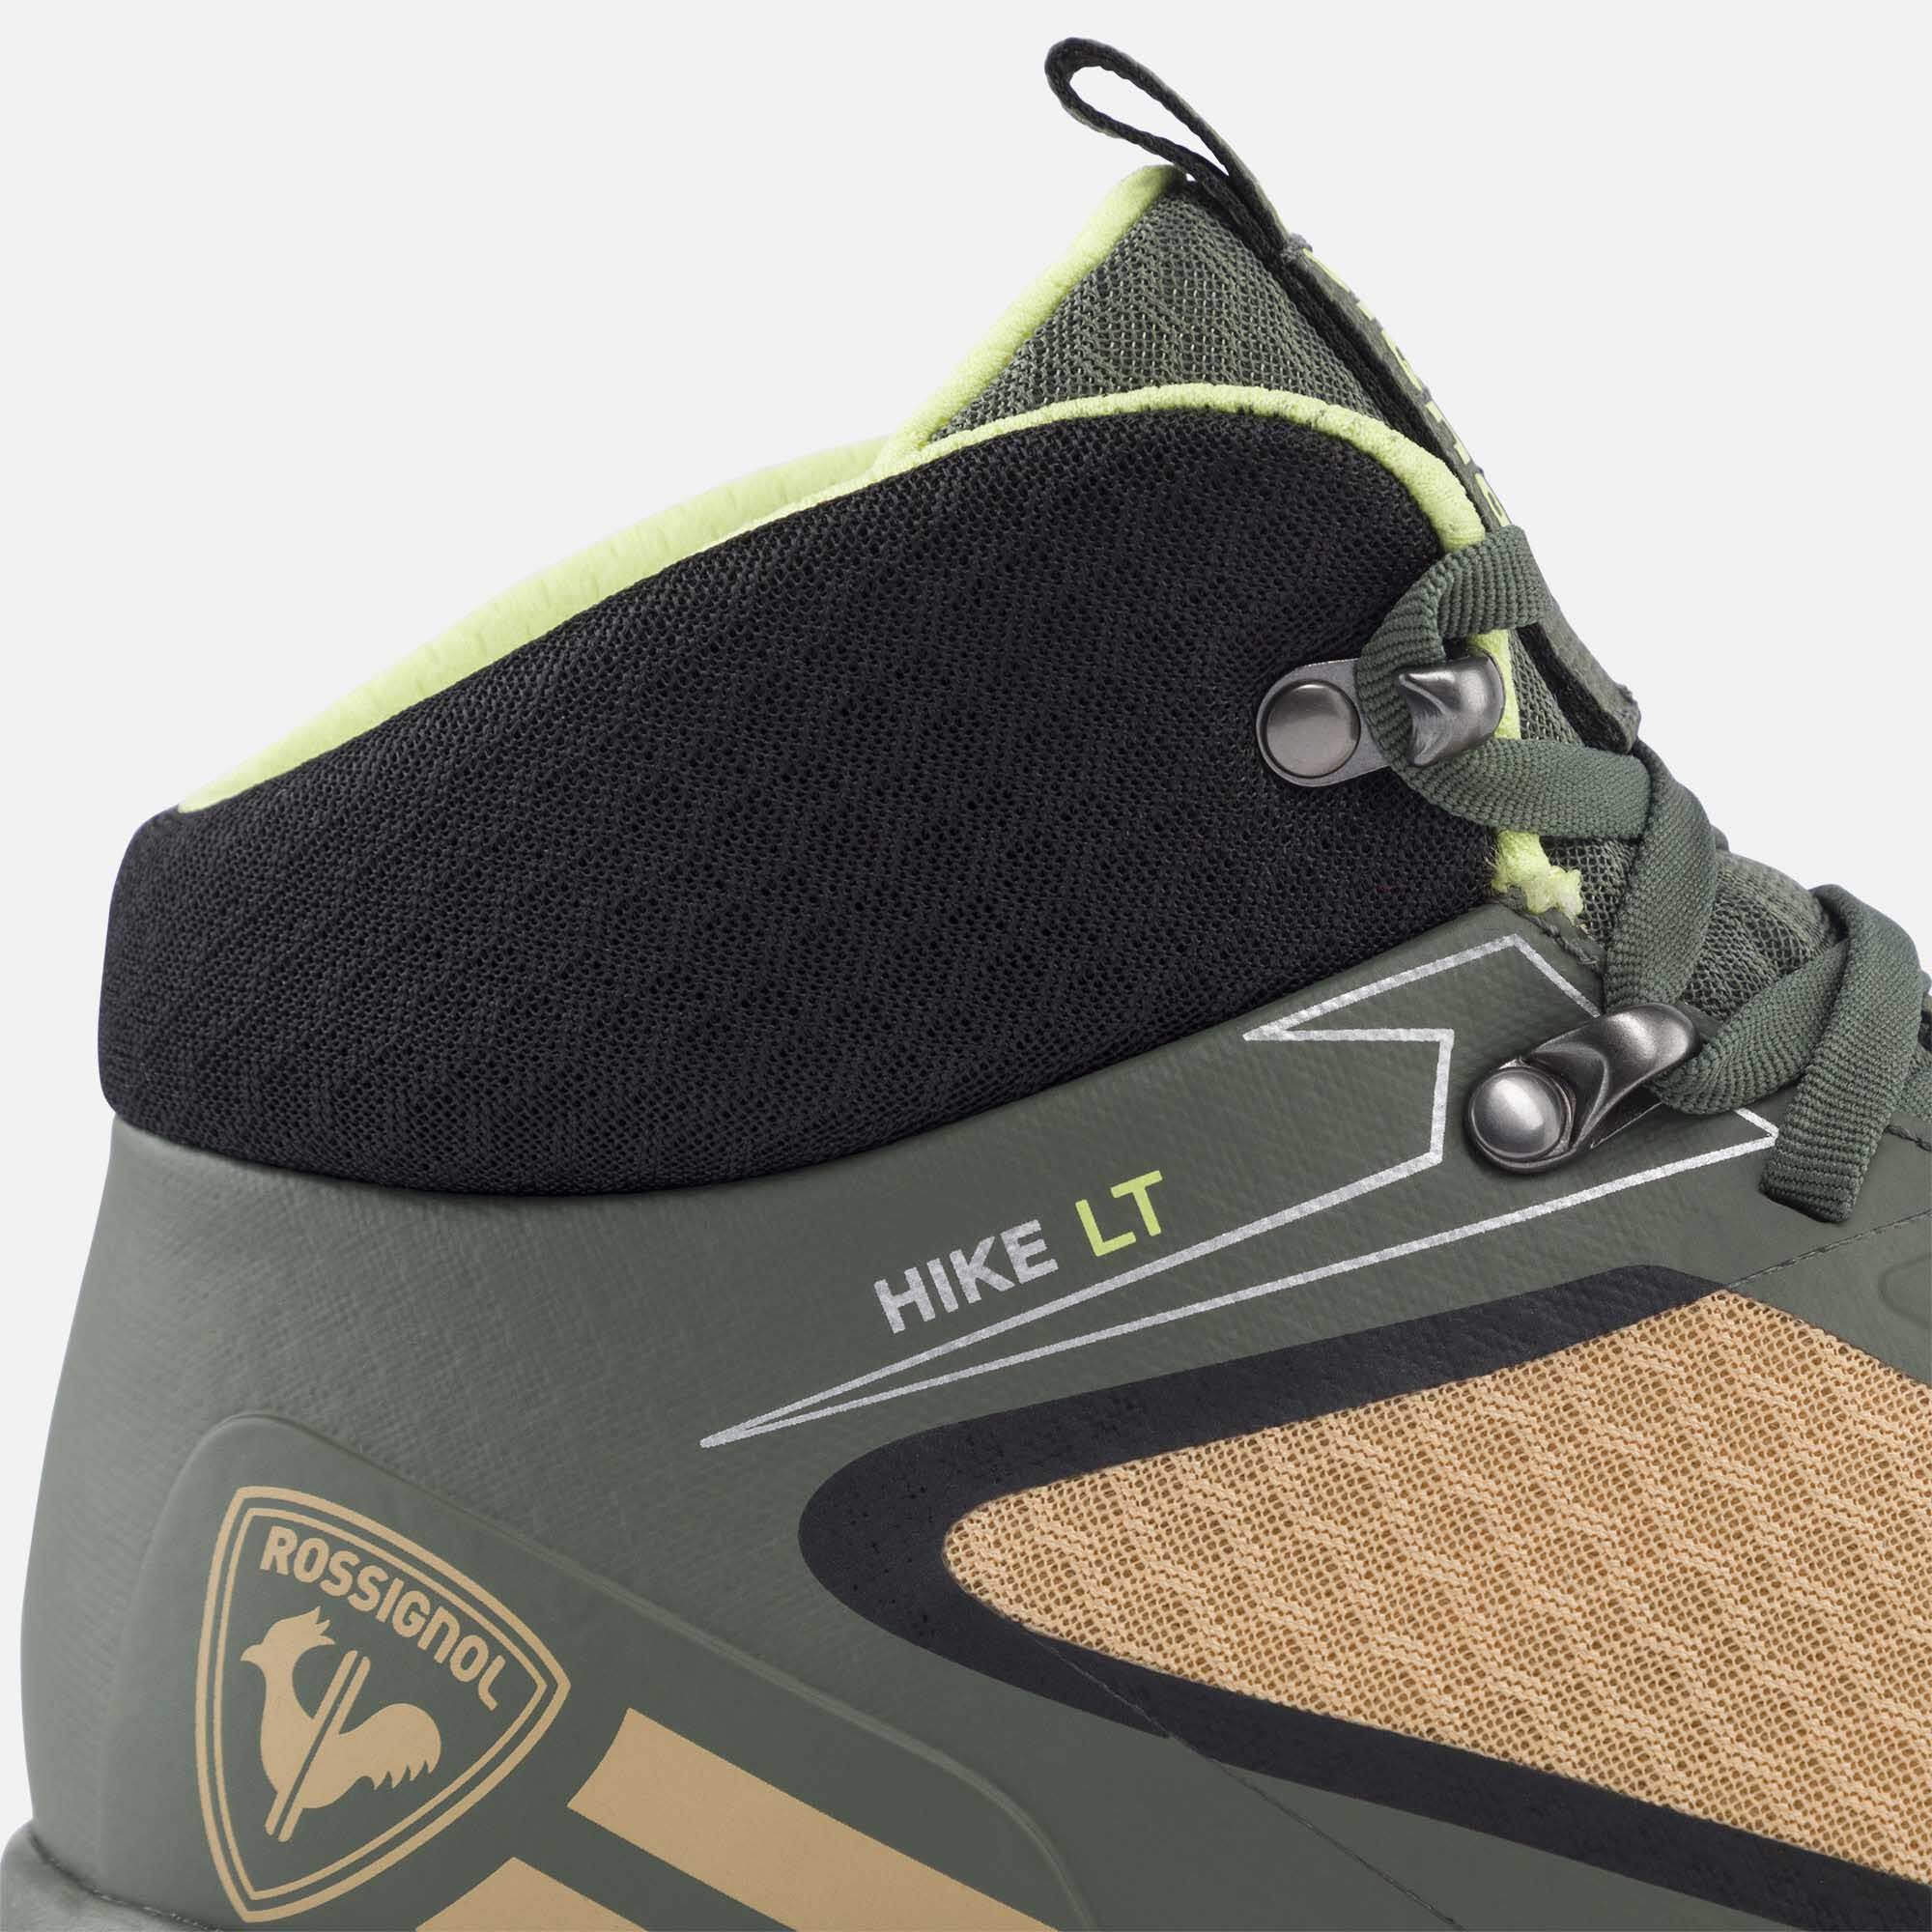 Rossignol Men's green lightweight hiking shoes | Boots Men | Rossignol